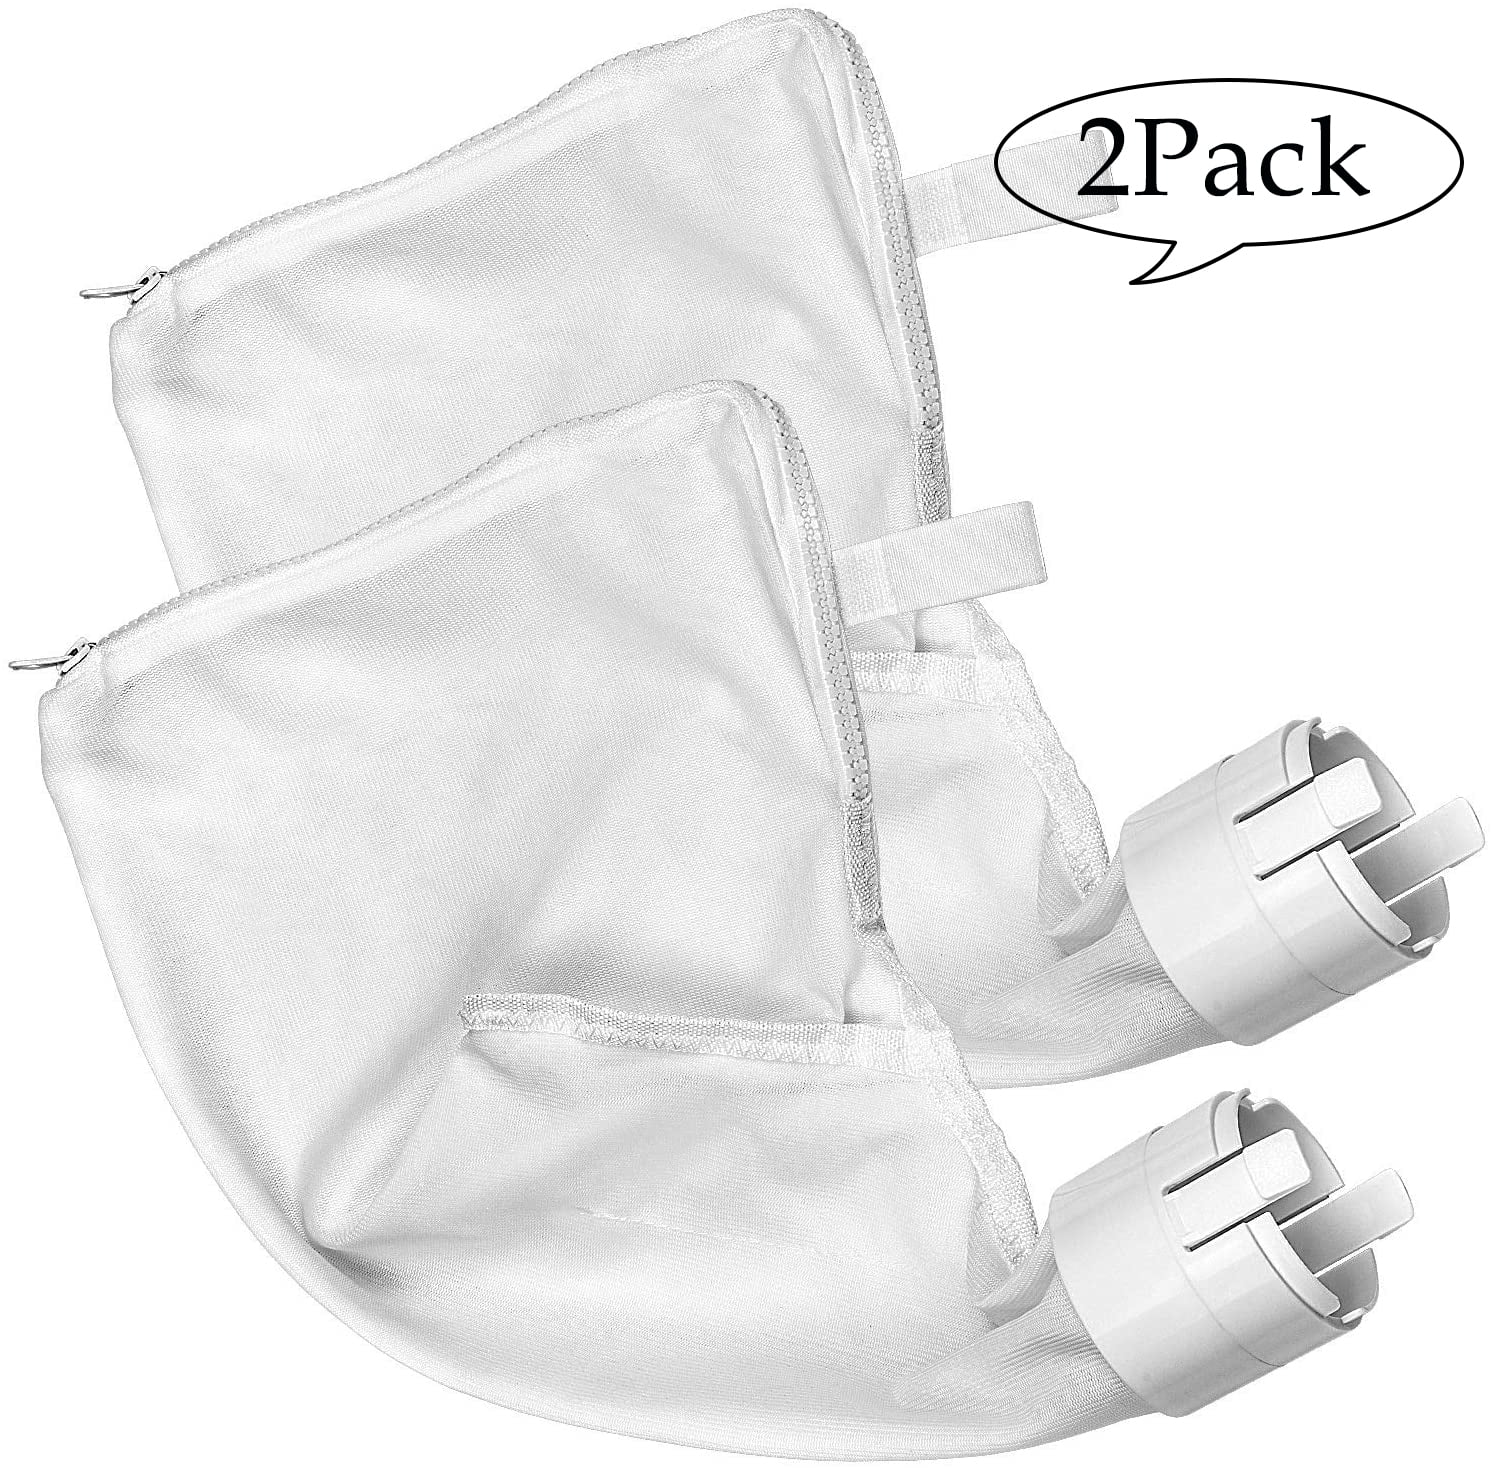 Pack Of 2 Nylon Mesh Pool Cleaner Bags Bag Zipper Replacement for Polaris 280 